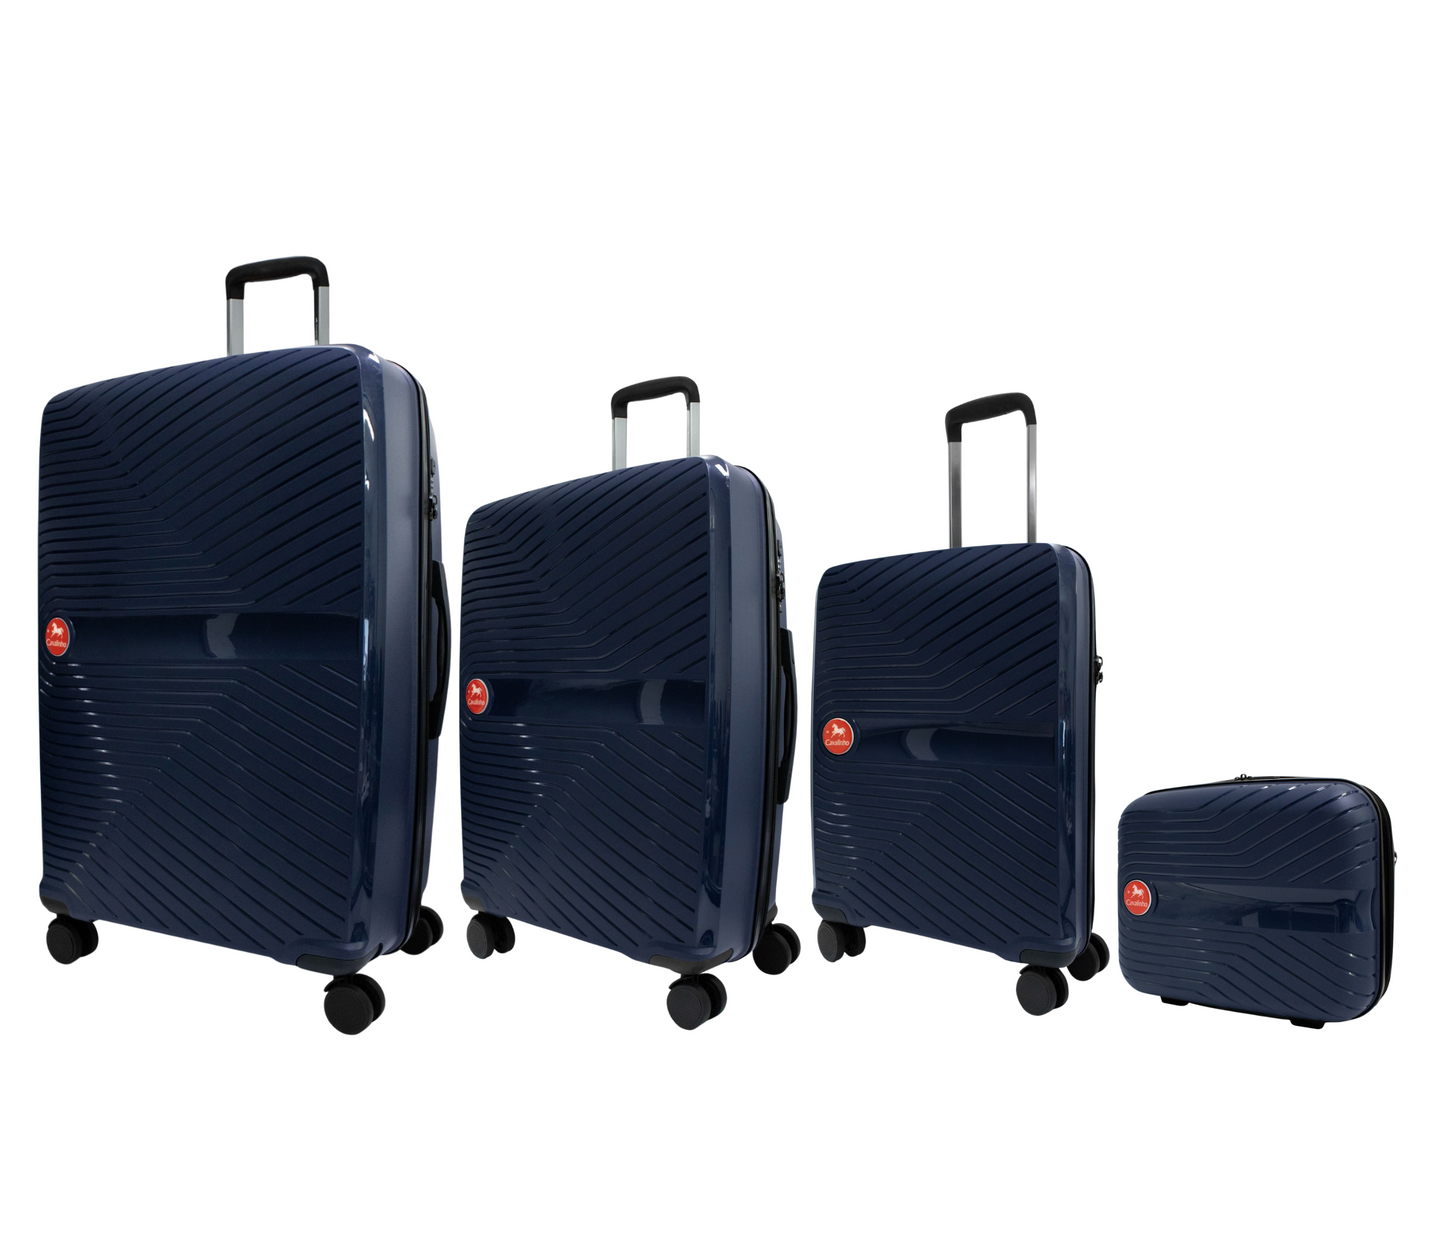 Cavalinho Canada & USA 4 Piece Set of Colorful Hardside Luggage (15", 19", 24", 28") - Navy - 68020004.03.S4_2